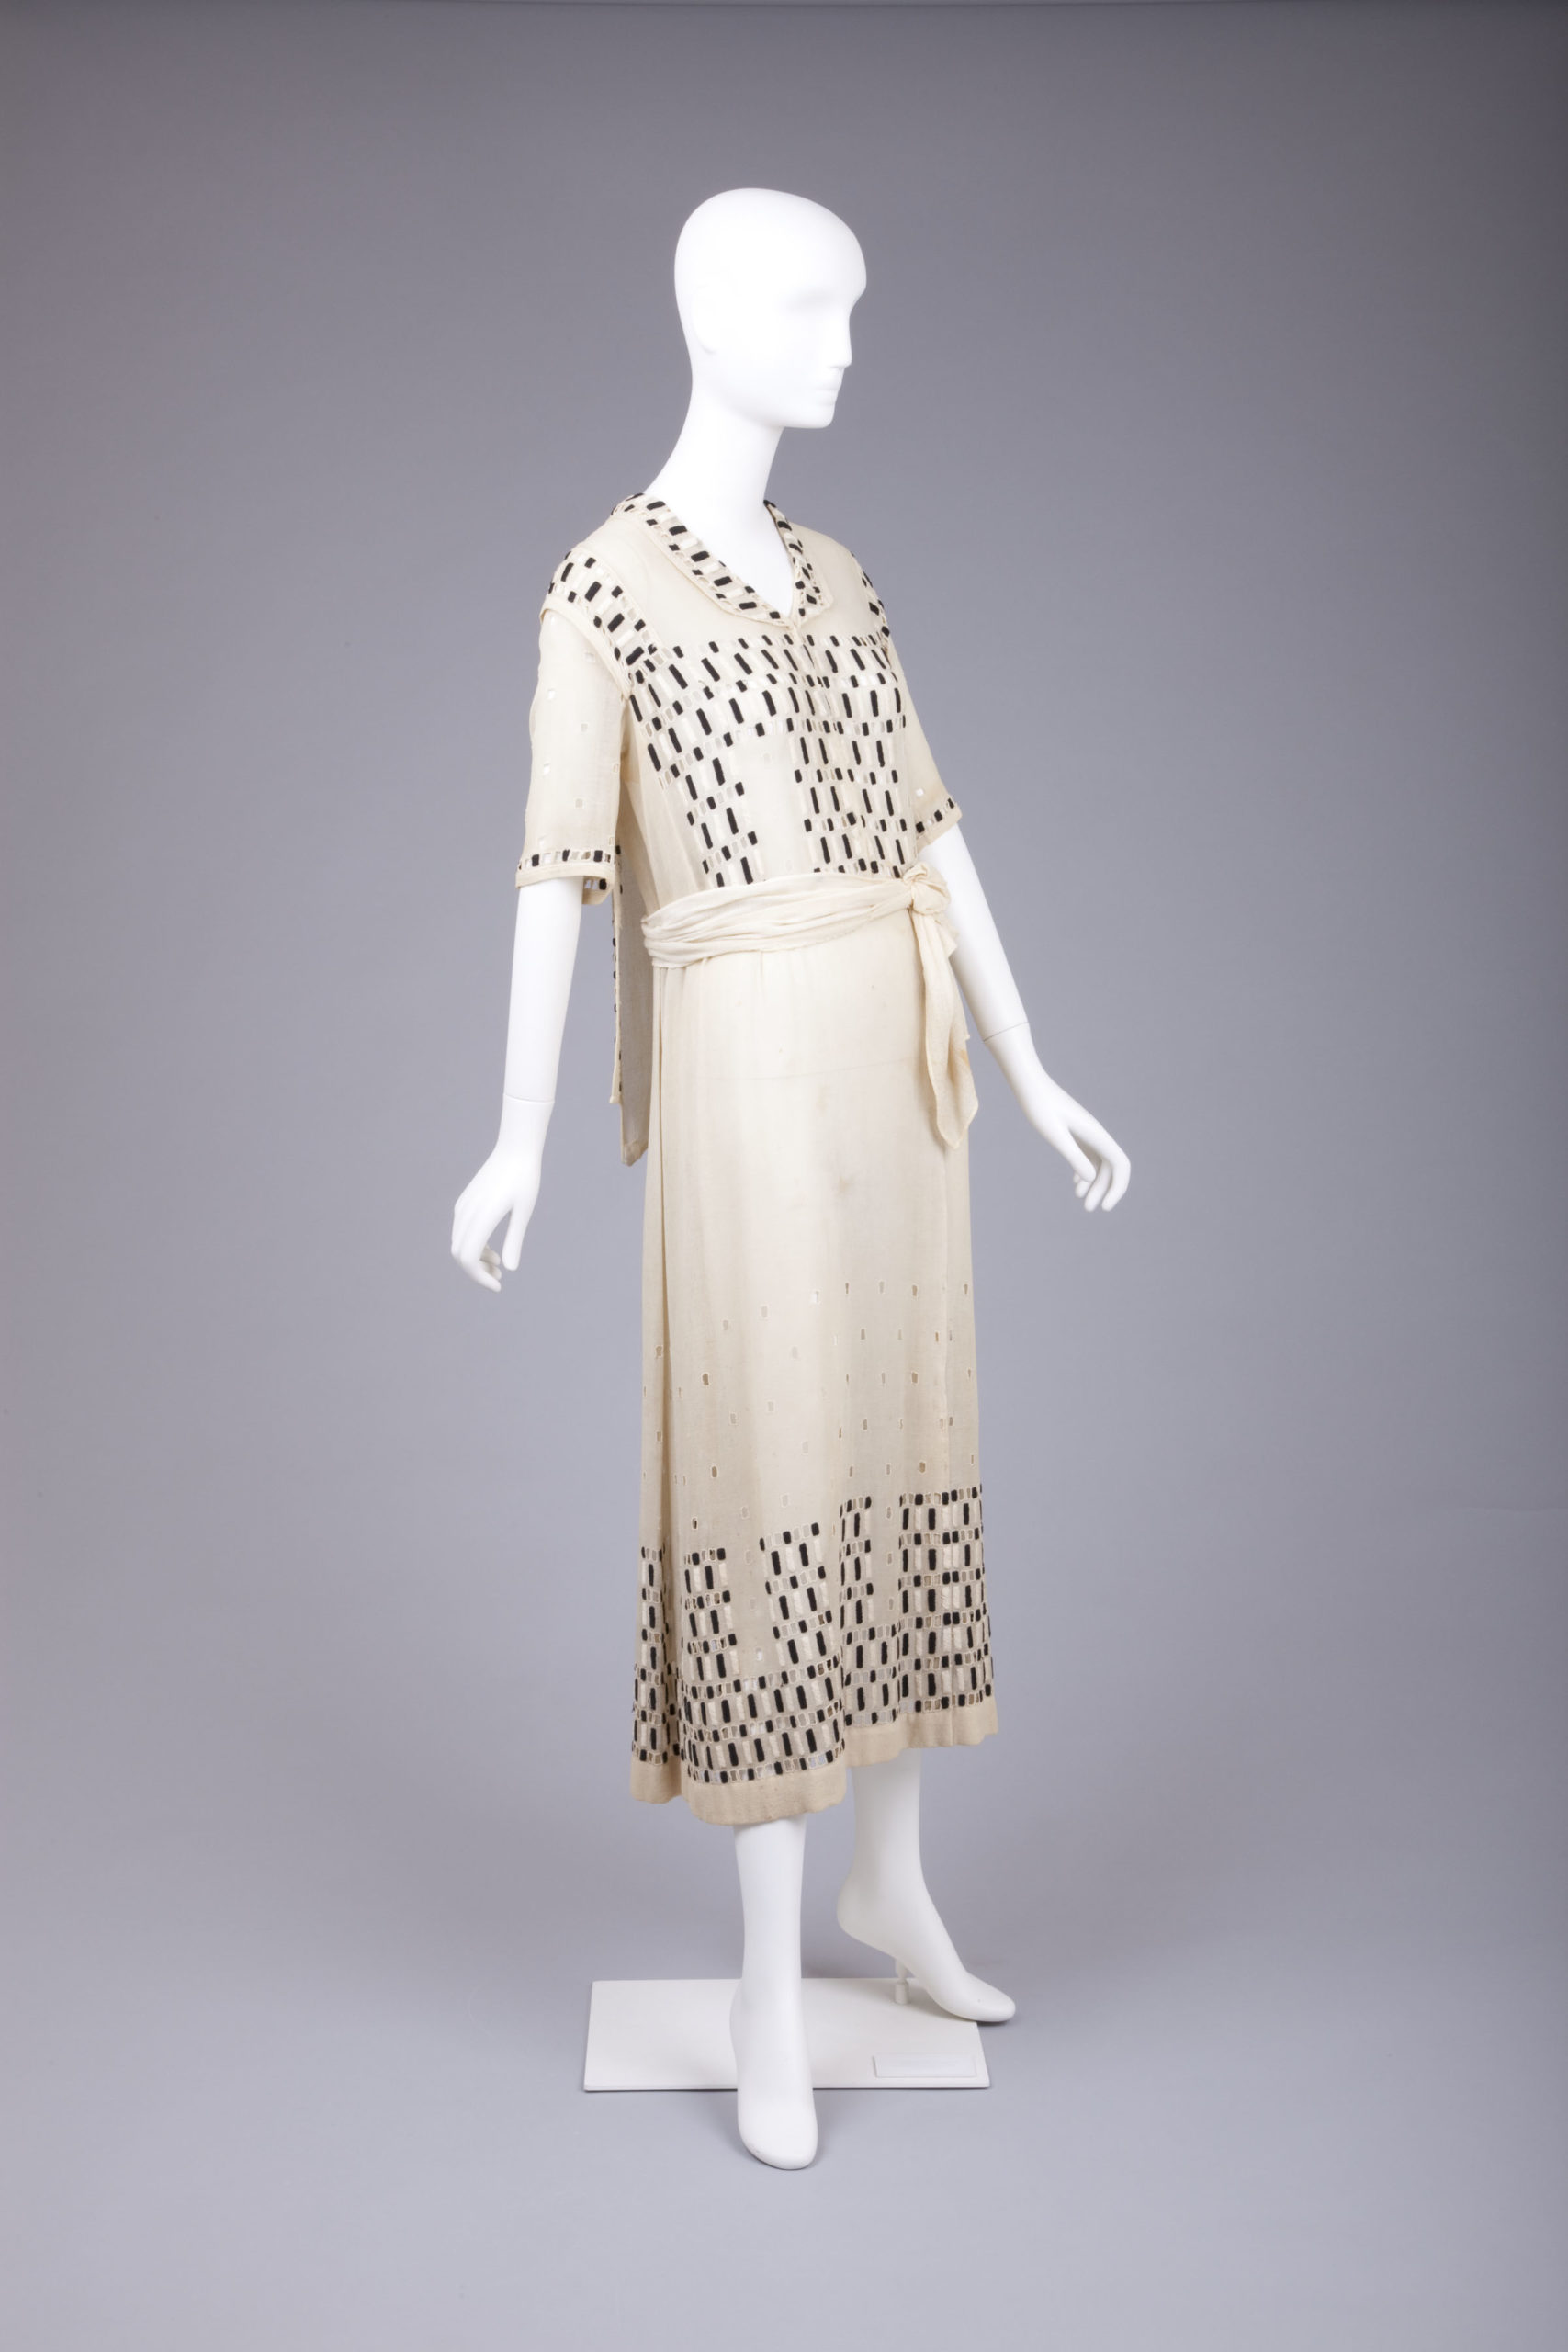 Dress, 1915, Silk with openwork embroidery, Goldstein Museum of Design, Gift of Charlotte Karlen, 2004.001.007